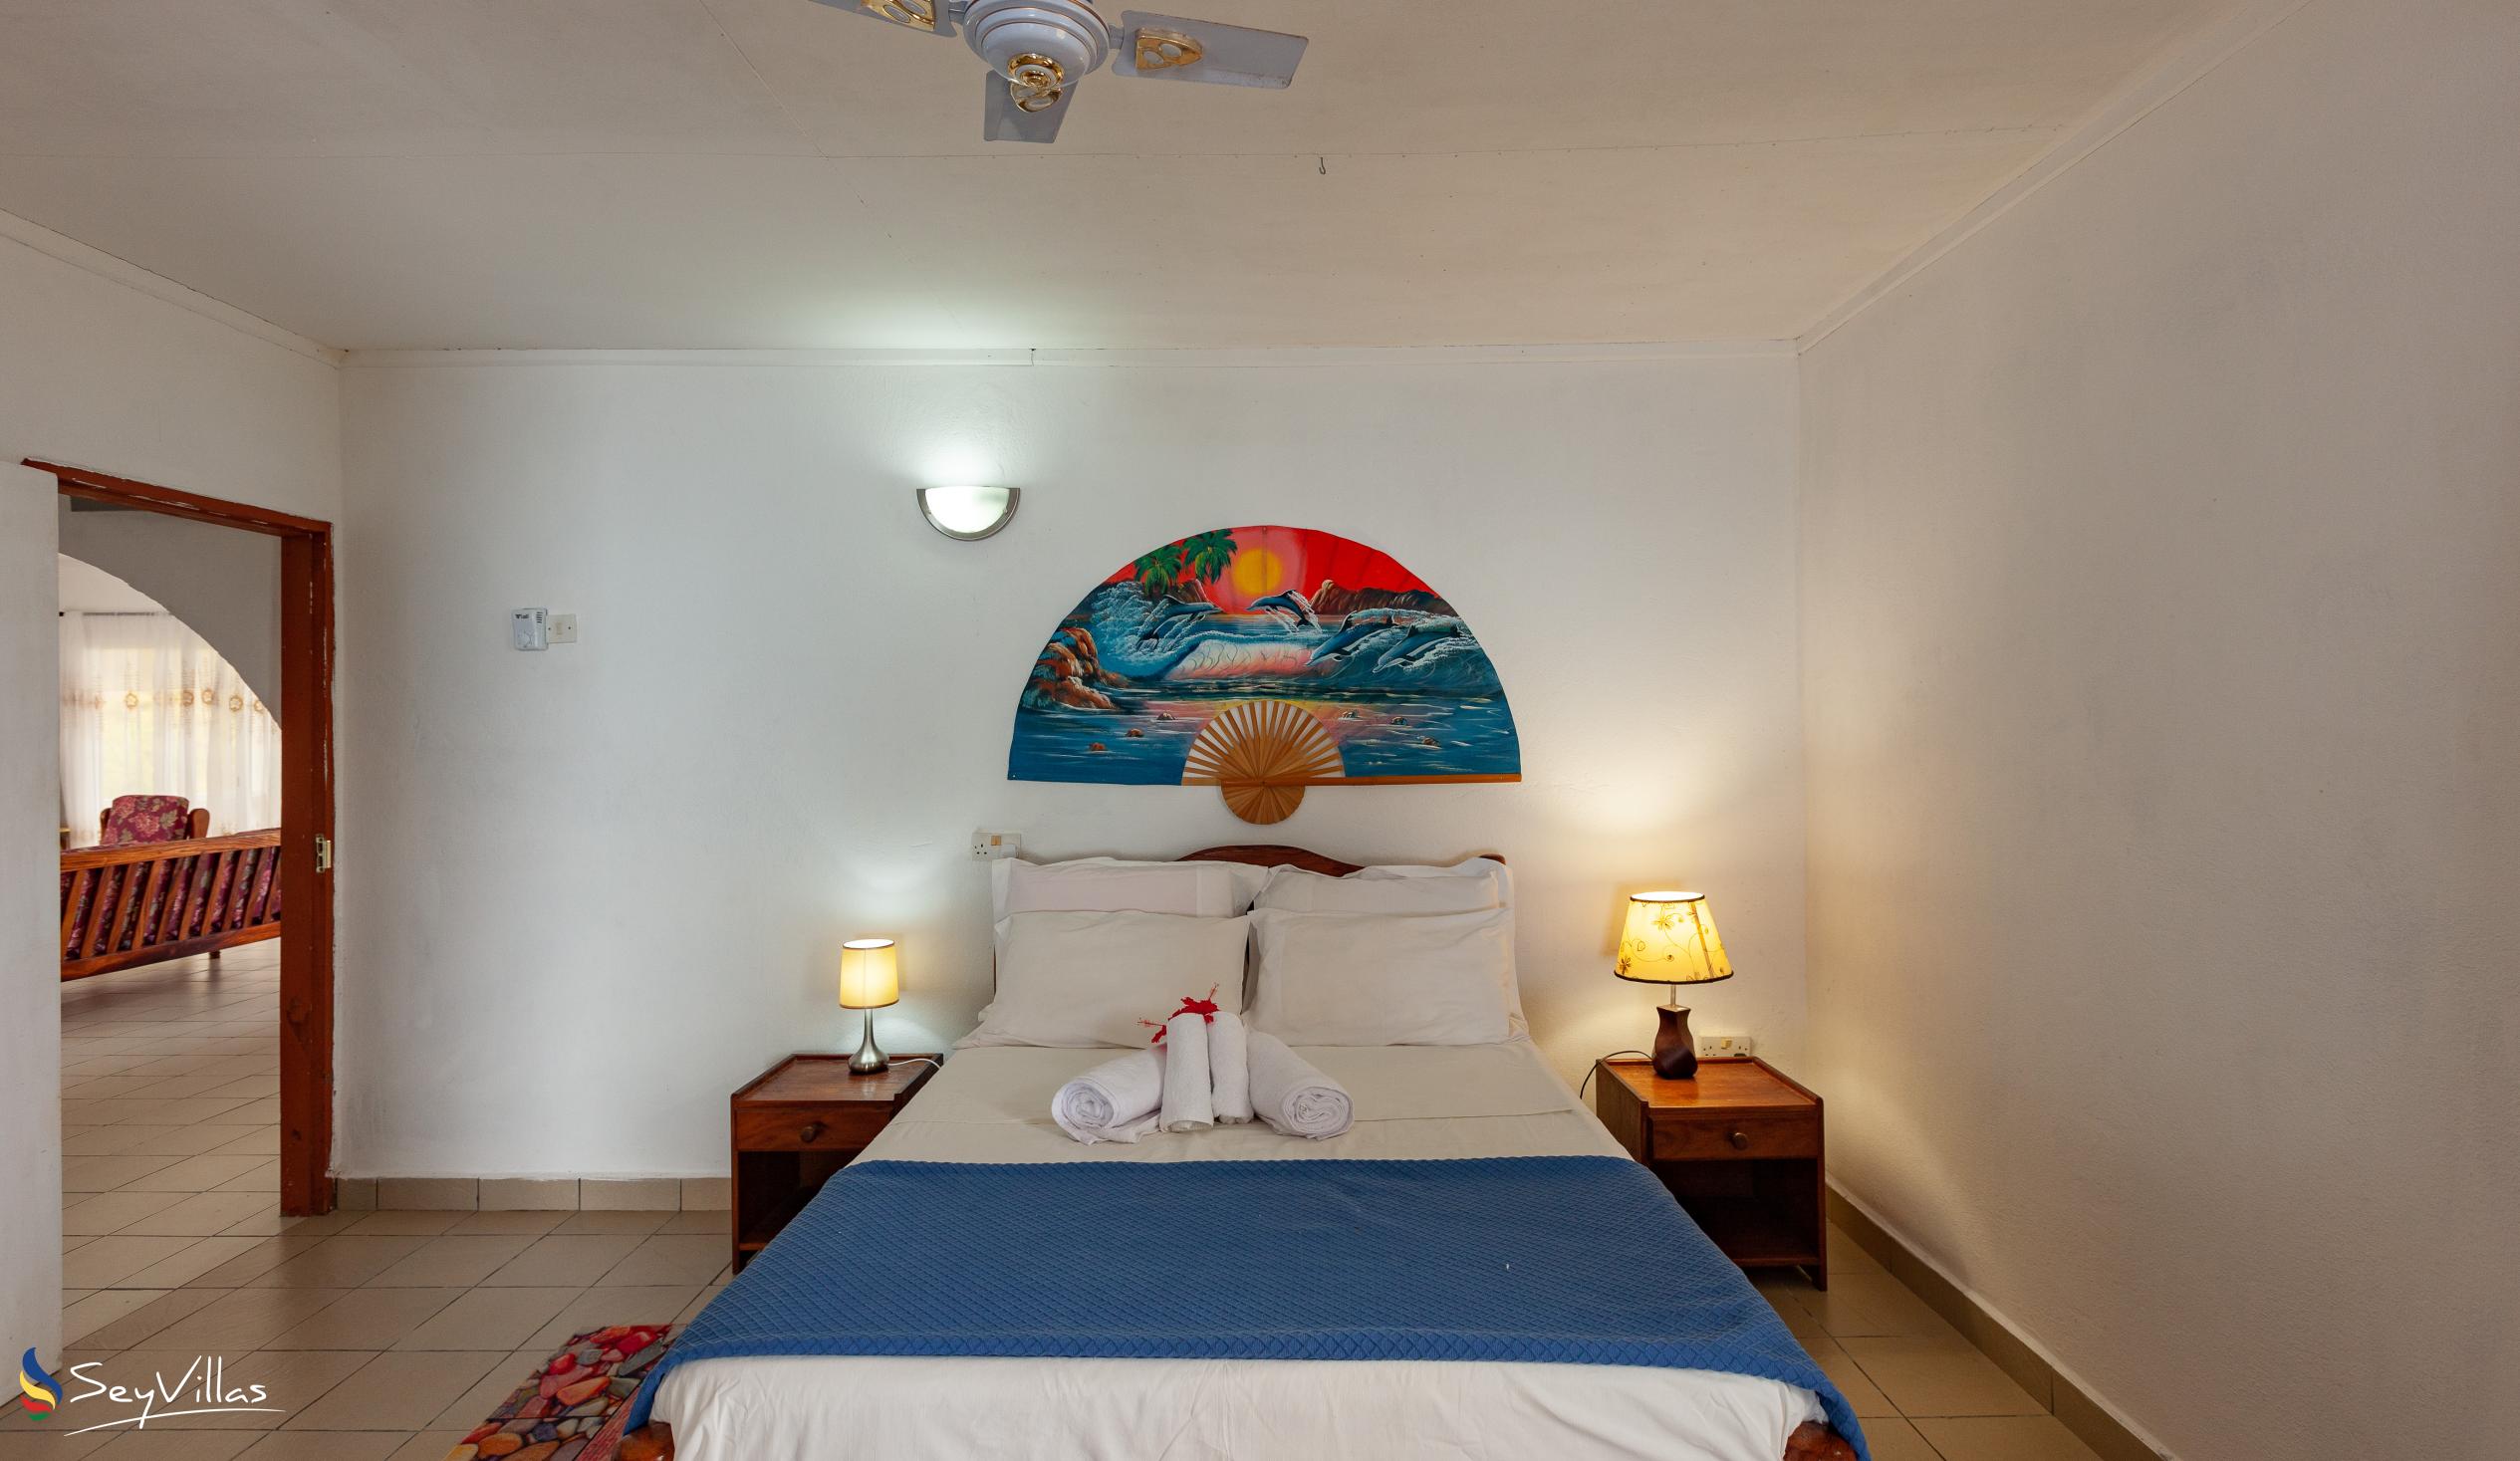 Foto 53: Maison du Soleil - Villa 2 chambres - Praslin (Seychelles)